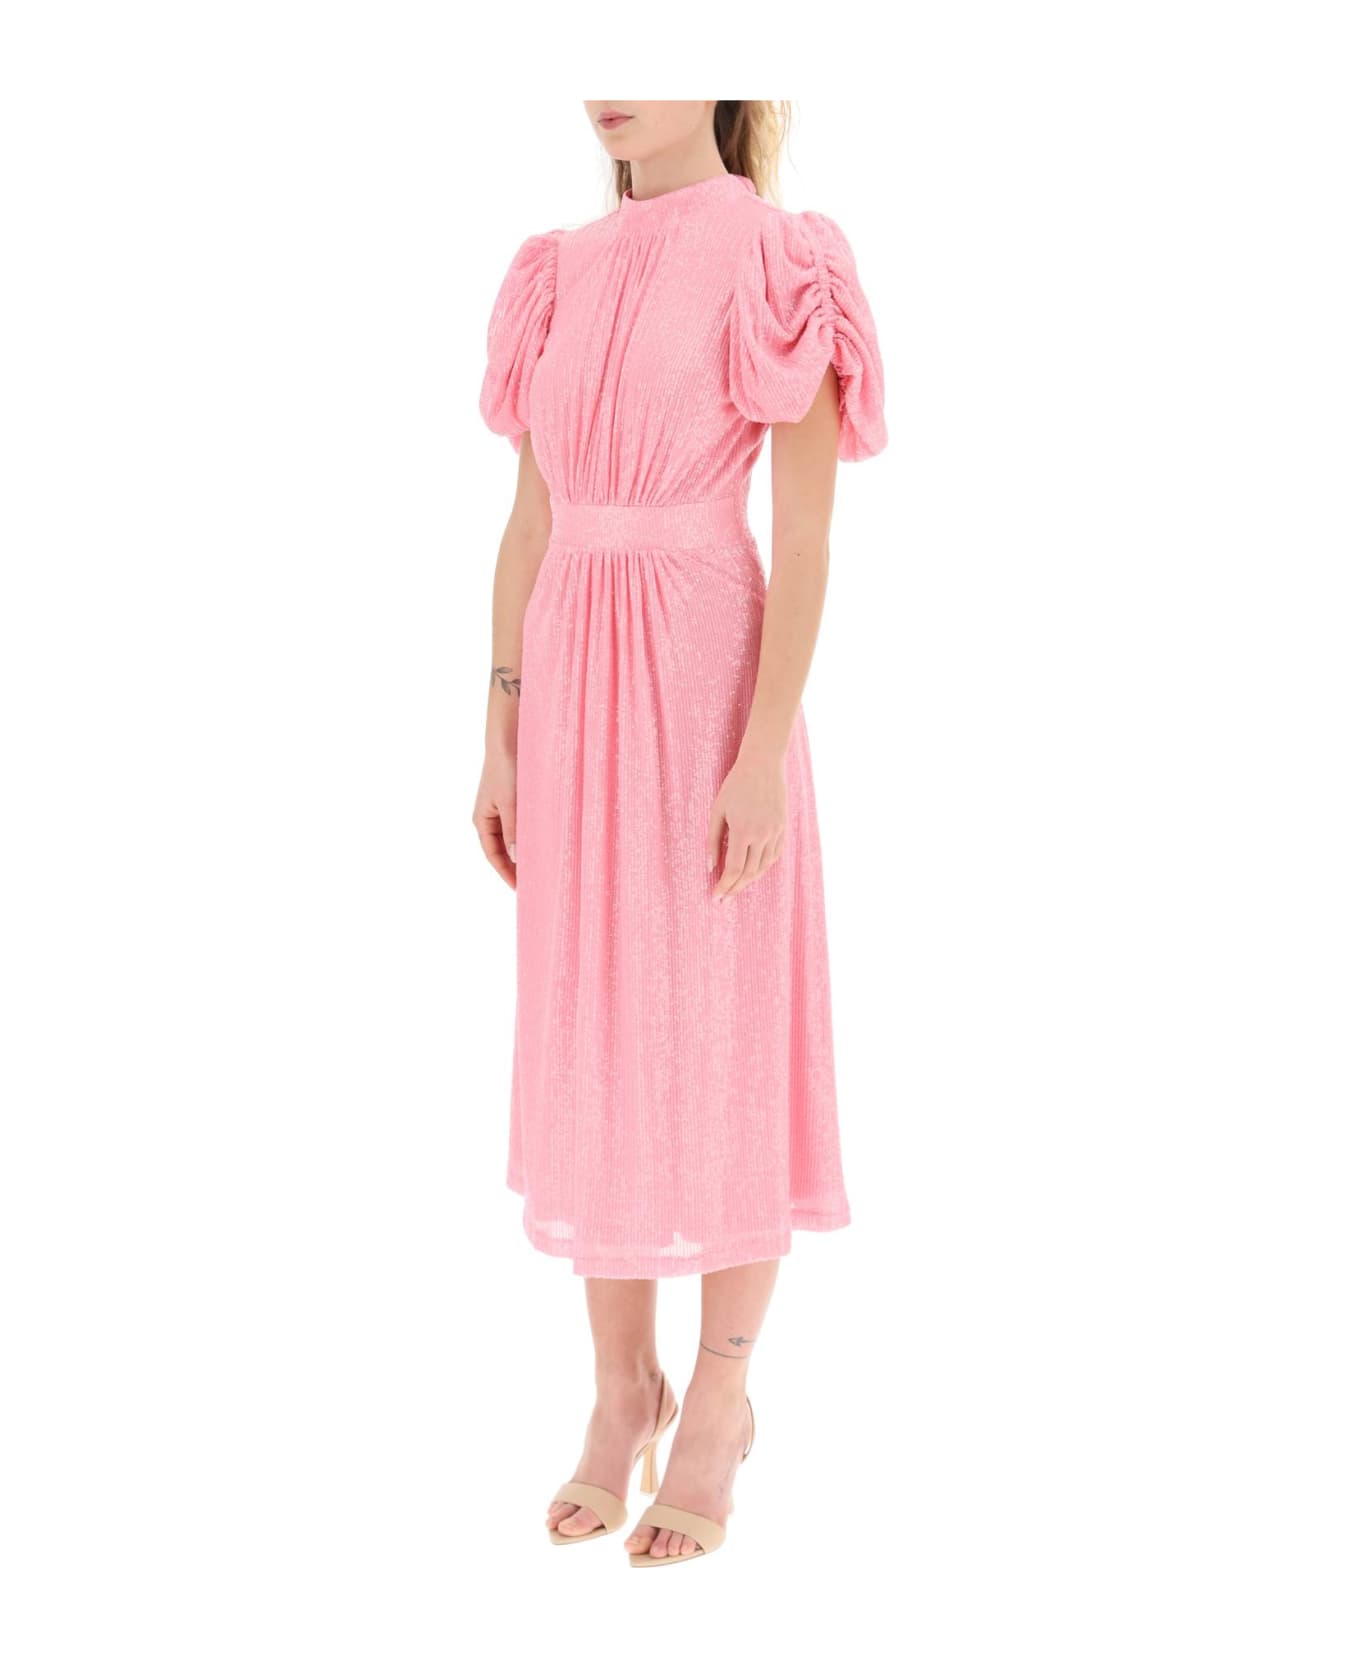 Rotate by Birger Christensen 'noon' Dress - BEGONIA PINK (Pink)